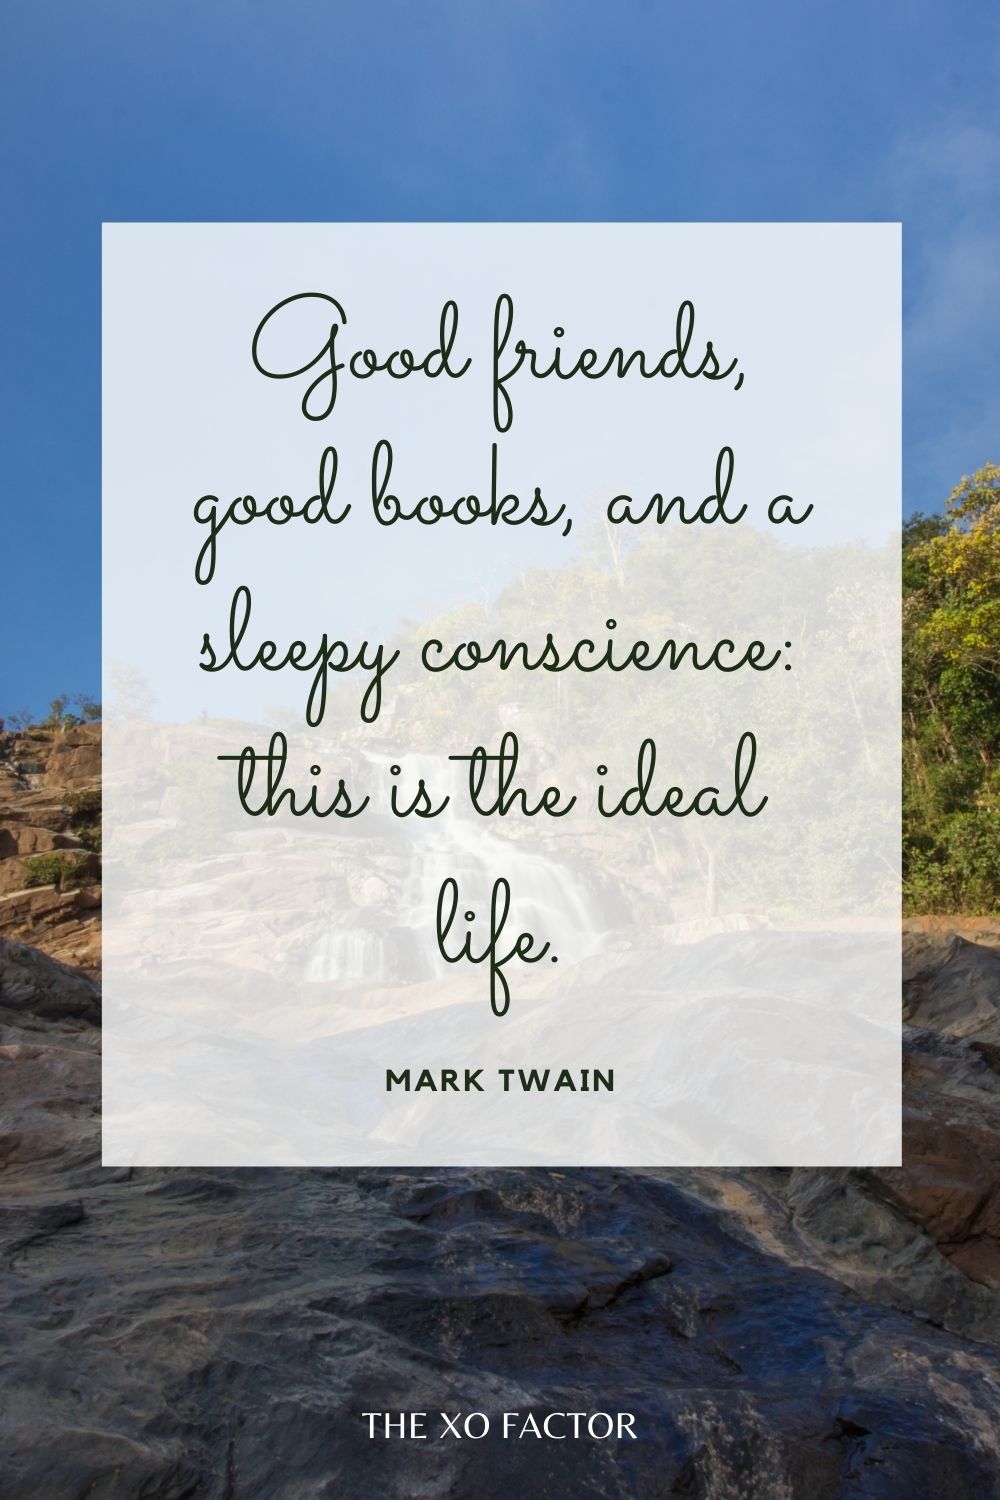 Good friends, good books, and a sleepy conscience: this is the ideal life.”  Mark Twain